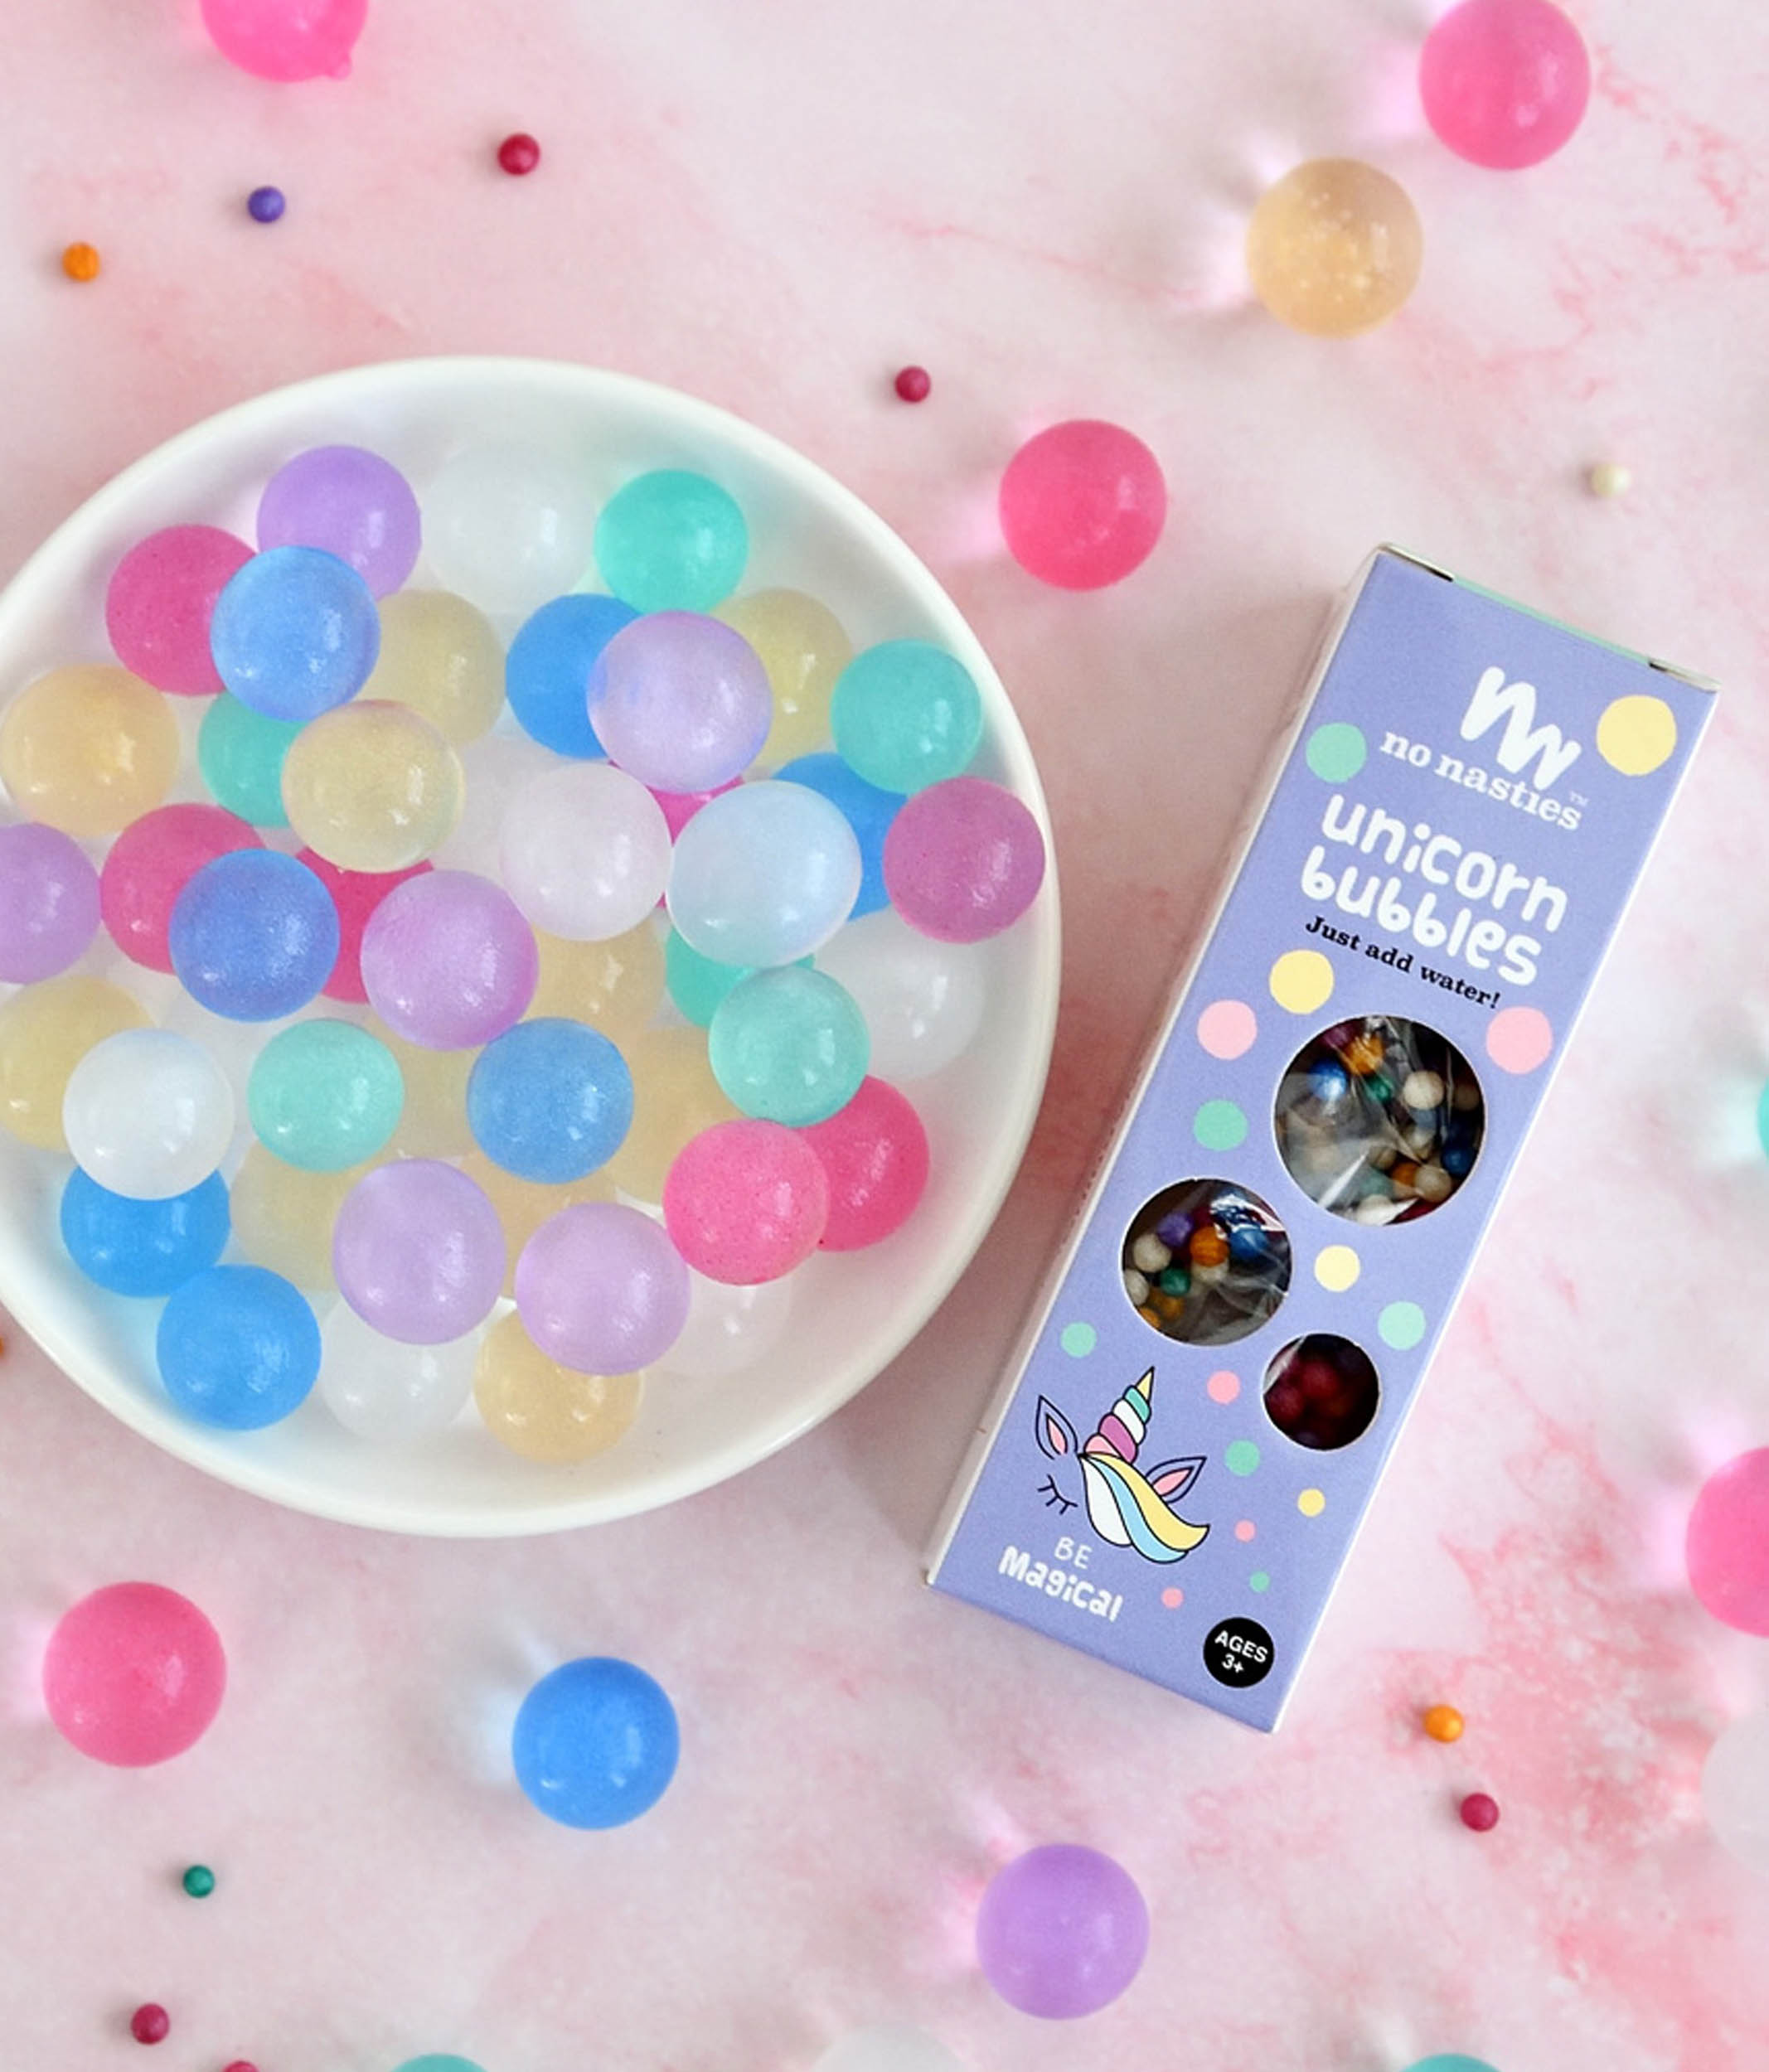 Unicorn Bubbles Pastel Biodegradable Water Beads